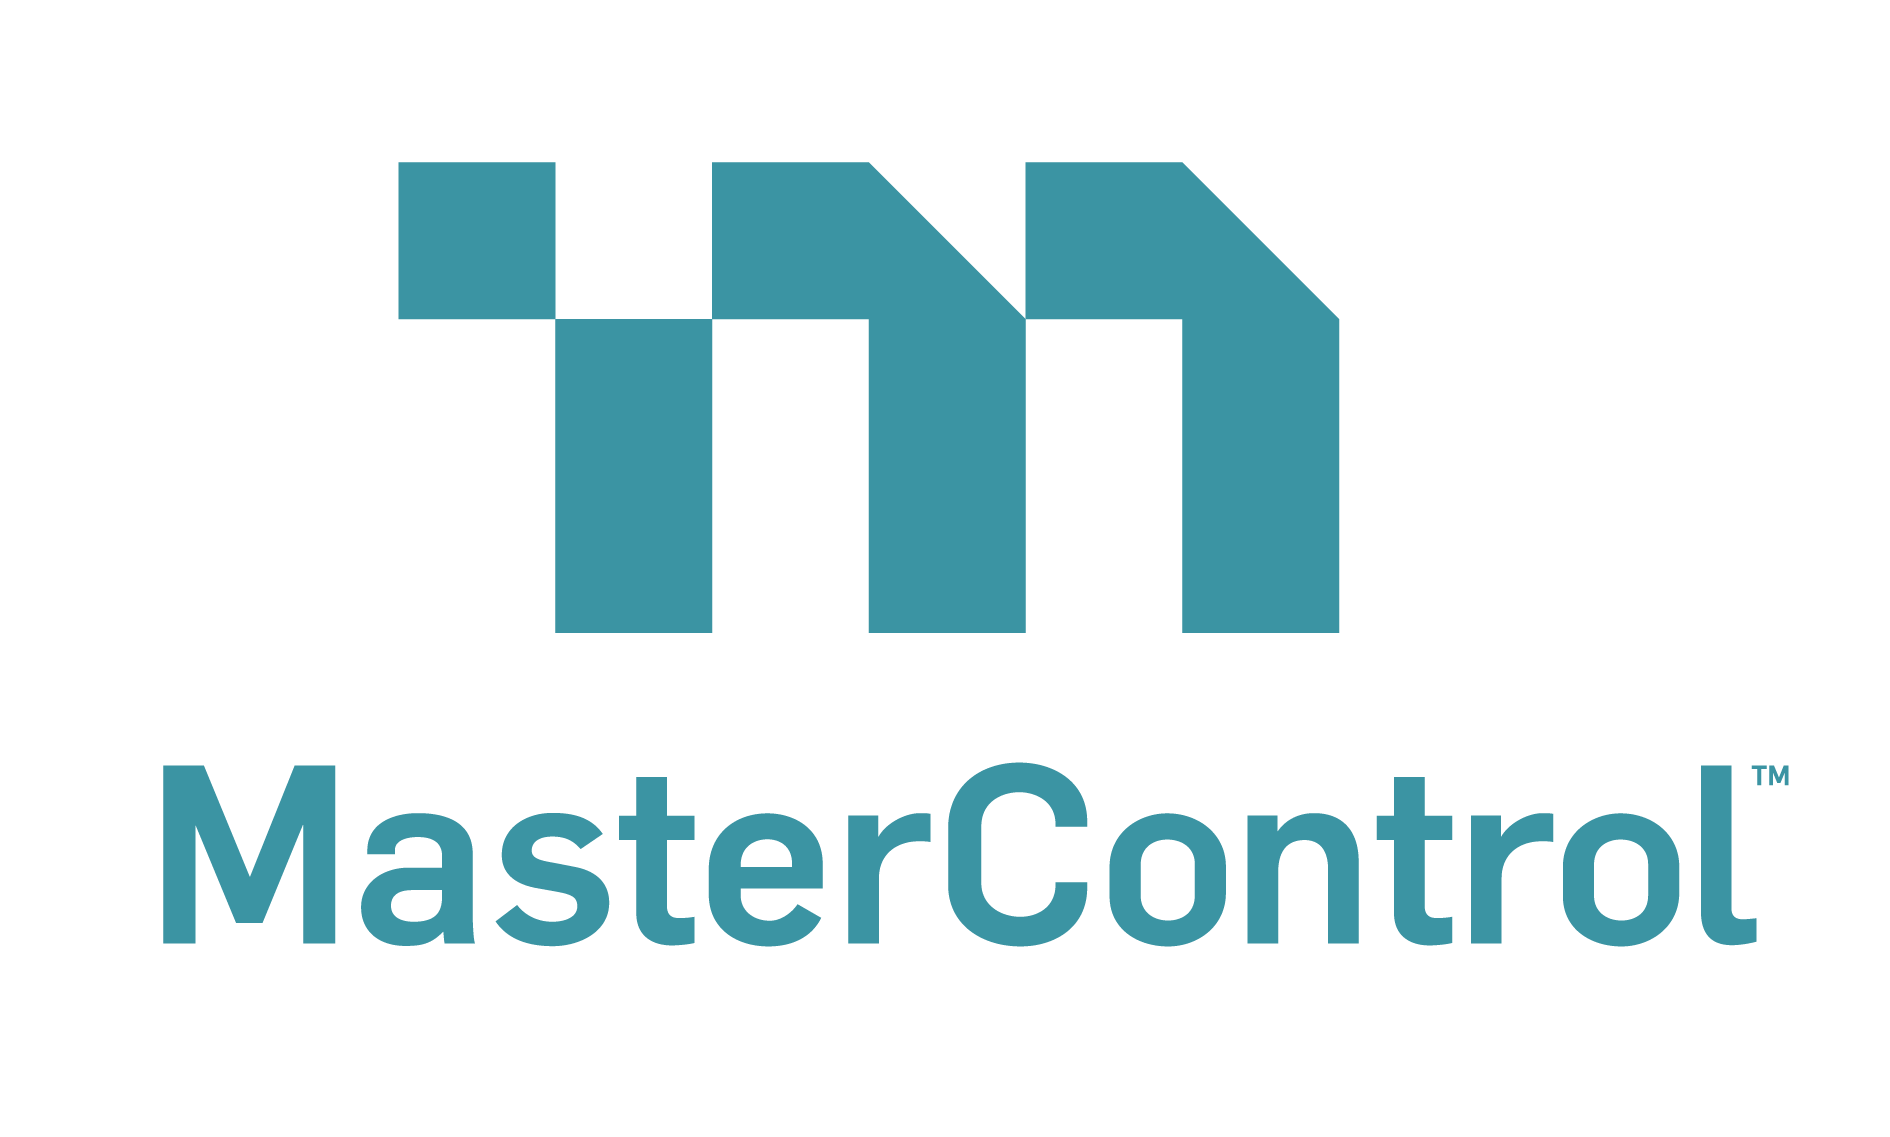 MasterControl_logo_vrt_teal